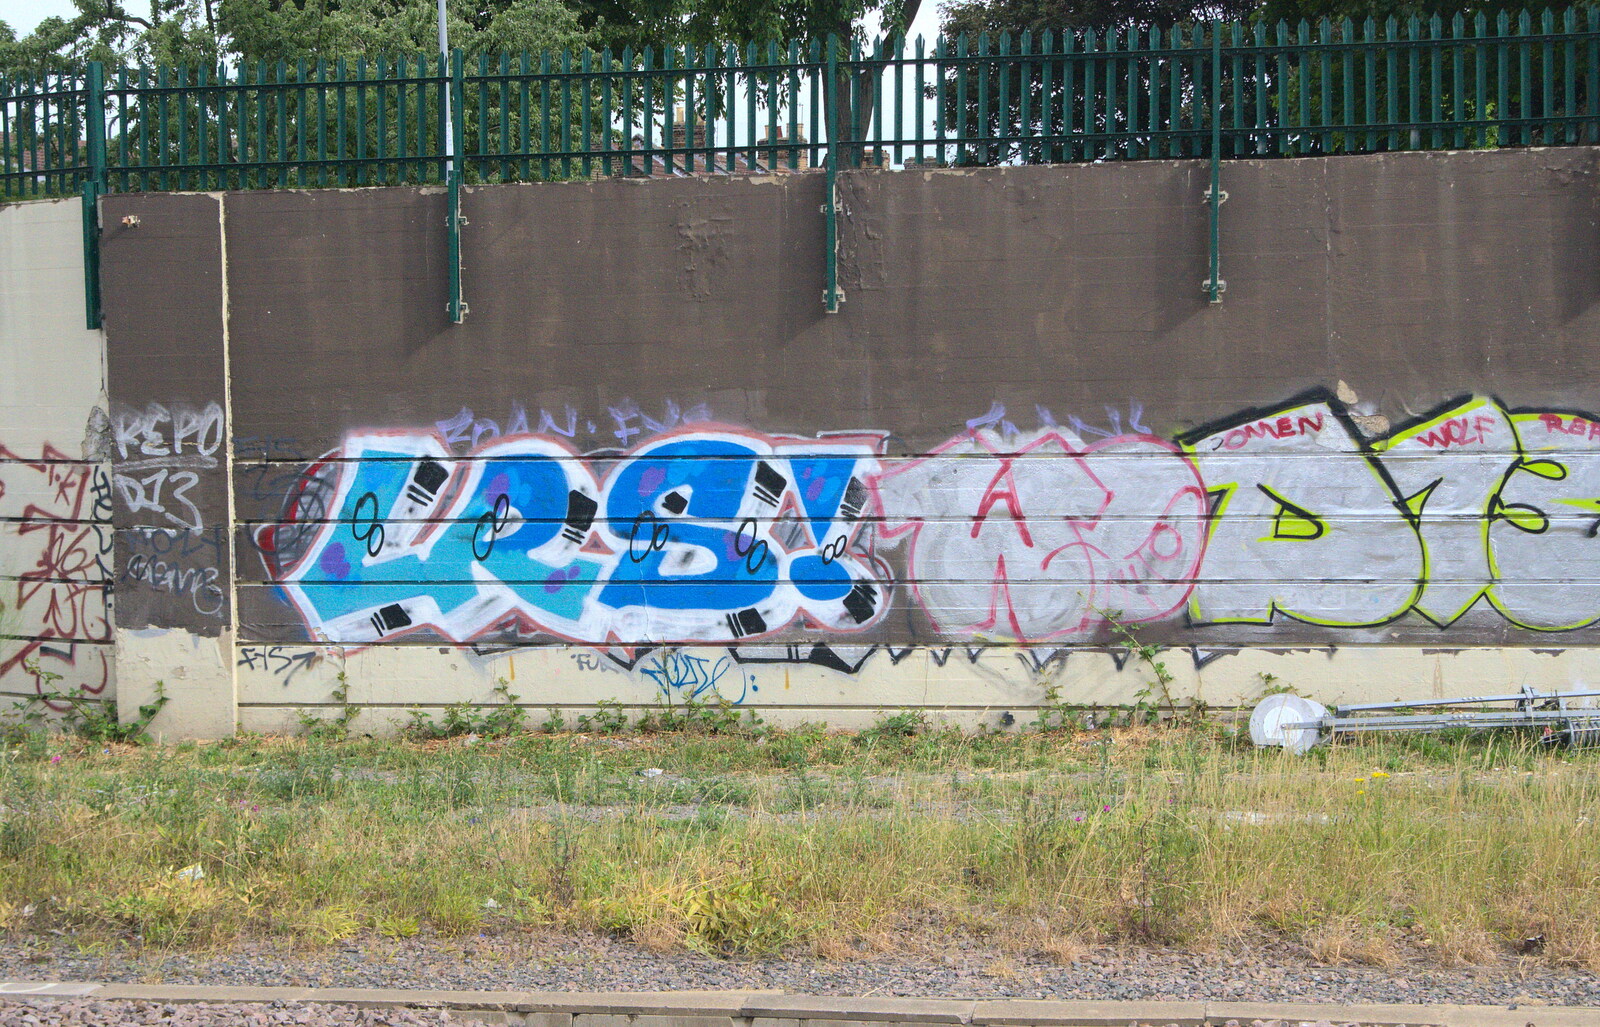 Trackside graffiti, Seven Kings from It's a SwiftKey Knockout, Richmond Rugby Club, Richmond, Surrey - 7th July 2015